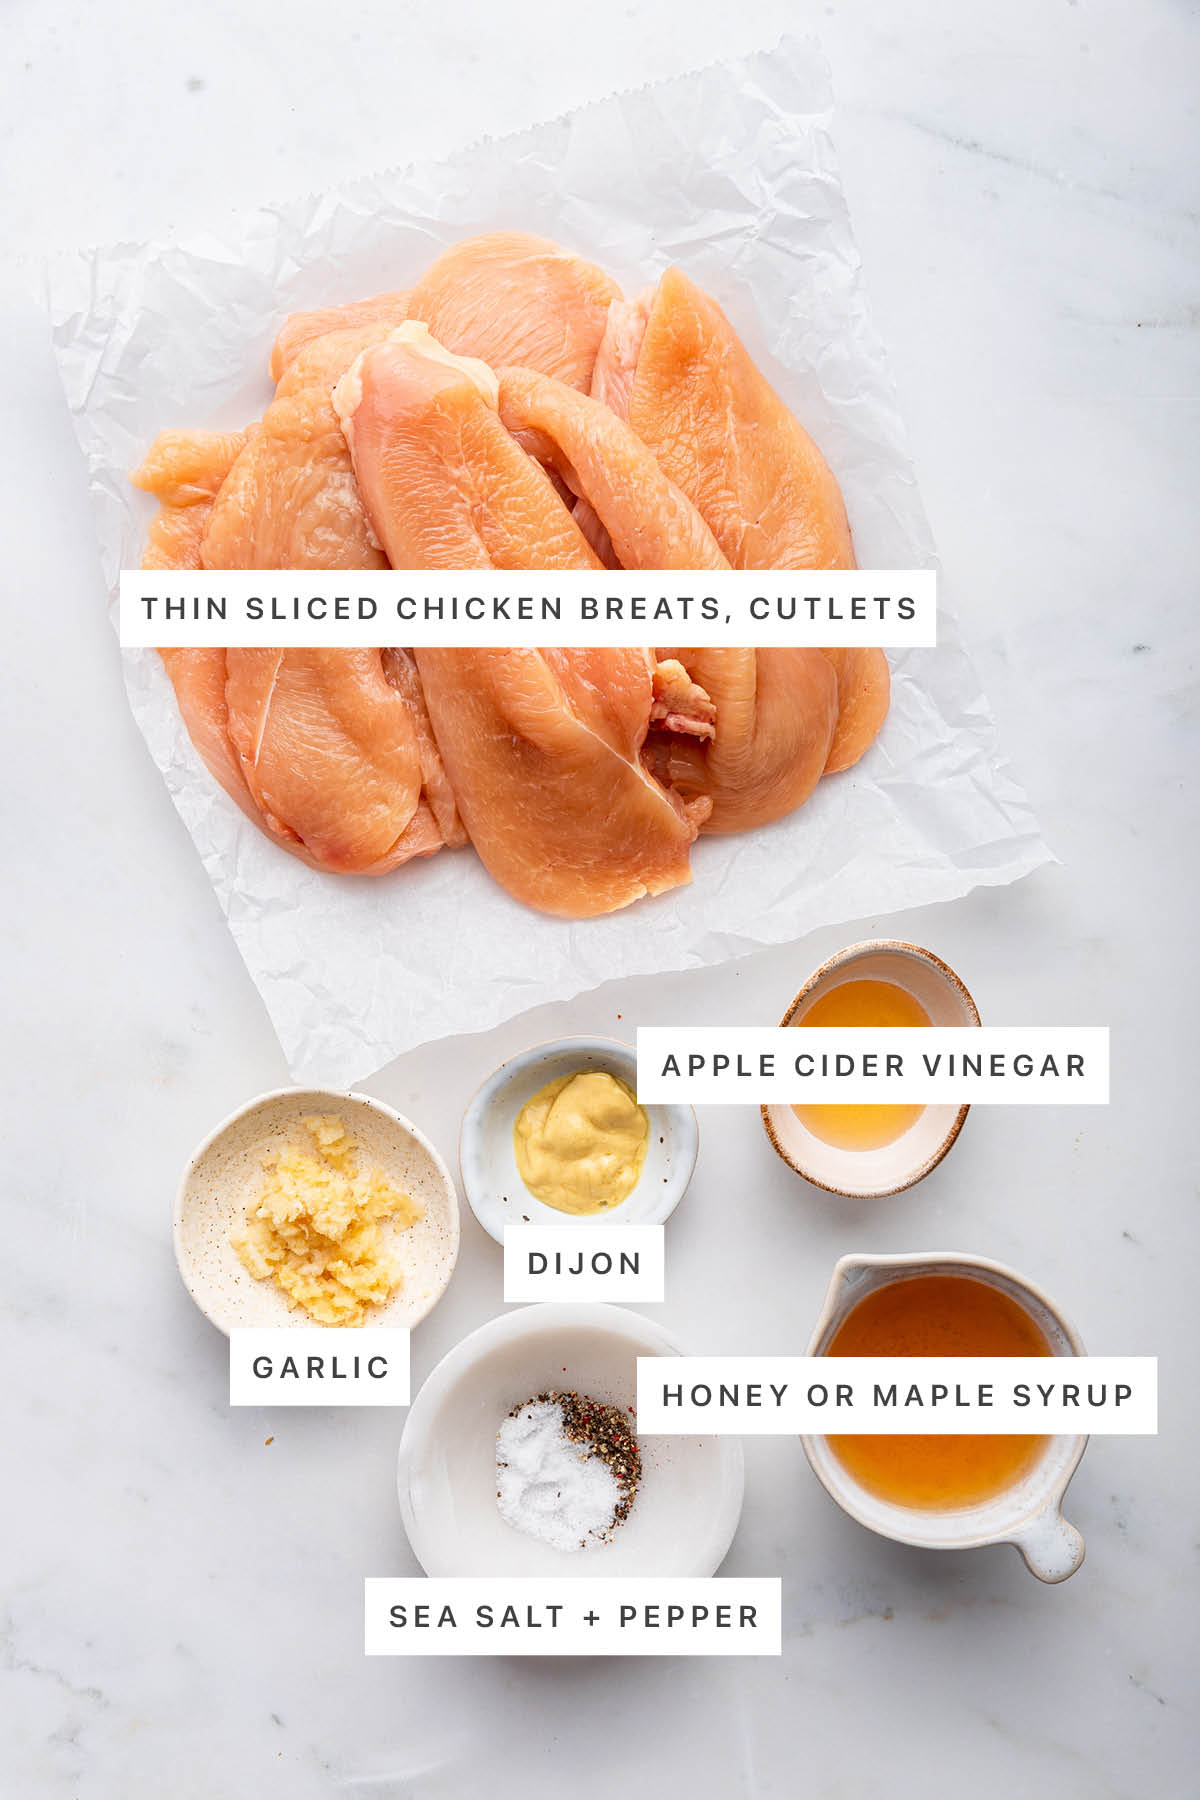 Ingredients measured out to make Air Fryer Chicken Cutlets: chicken cutlets, garlic, dijon, apple cider vinegar, sea salt, pepper and honey.